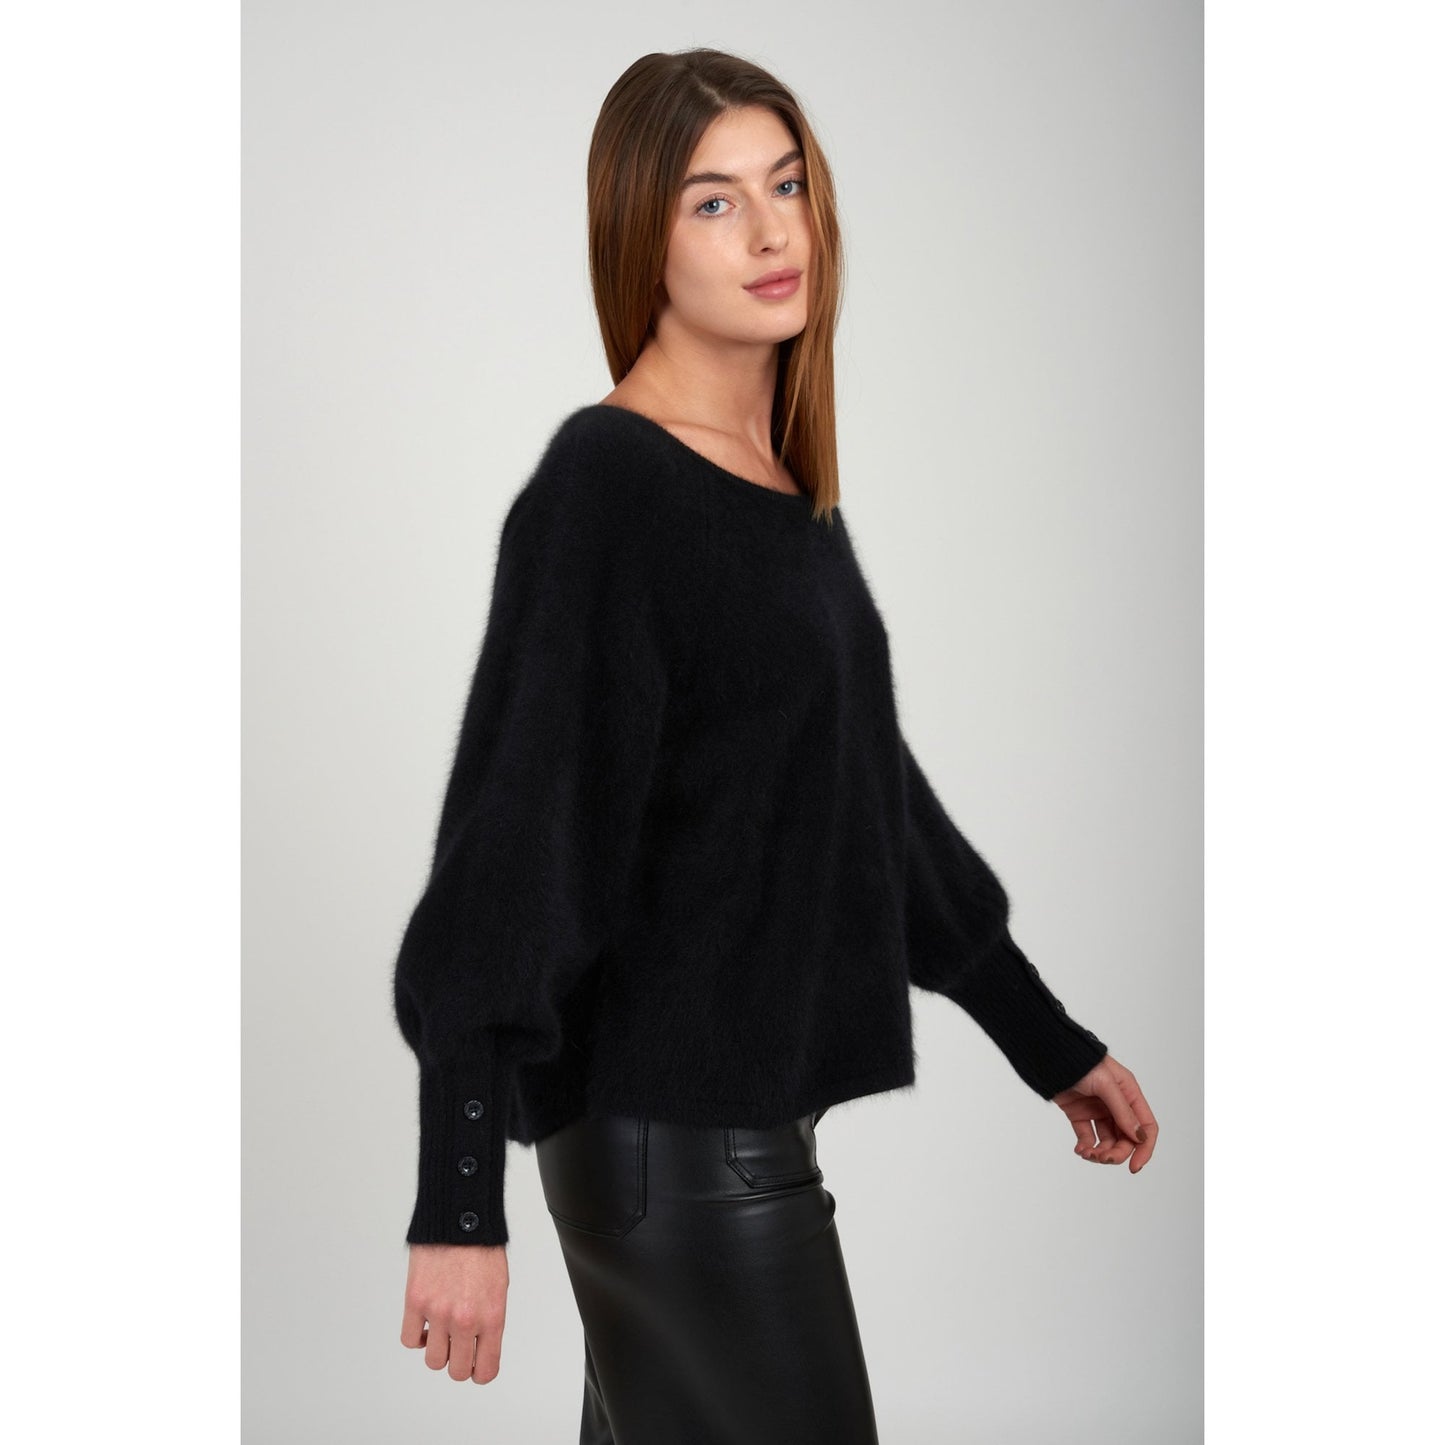 Estheme Cashmere Lux Black Sweater